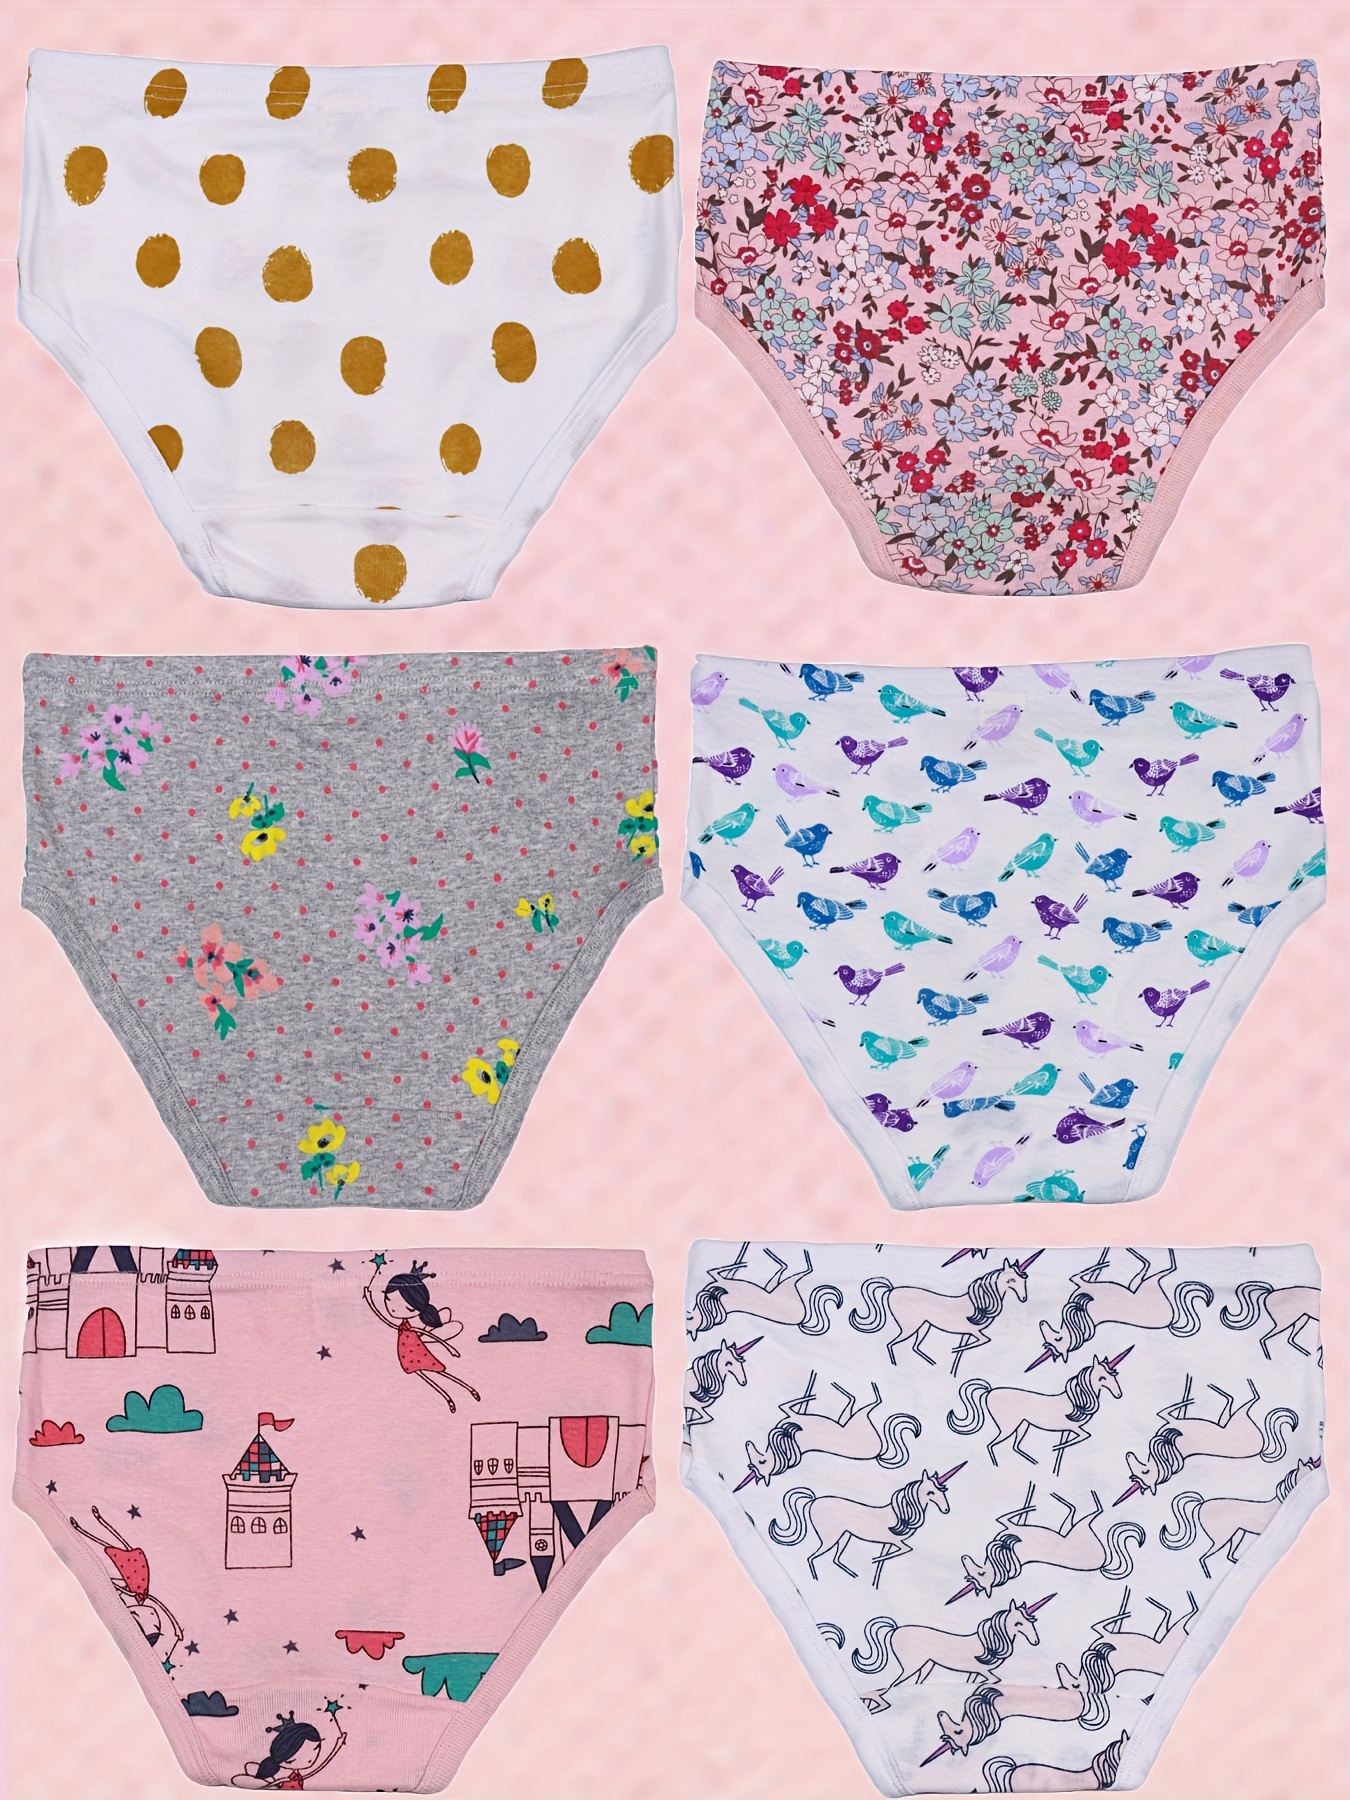 5 Pcs/lot Children's Underwear Small Dot Triangle Cotton Underwear